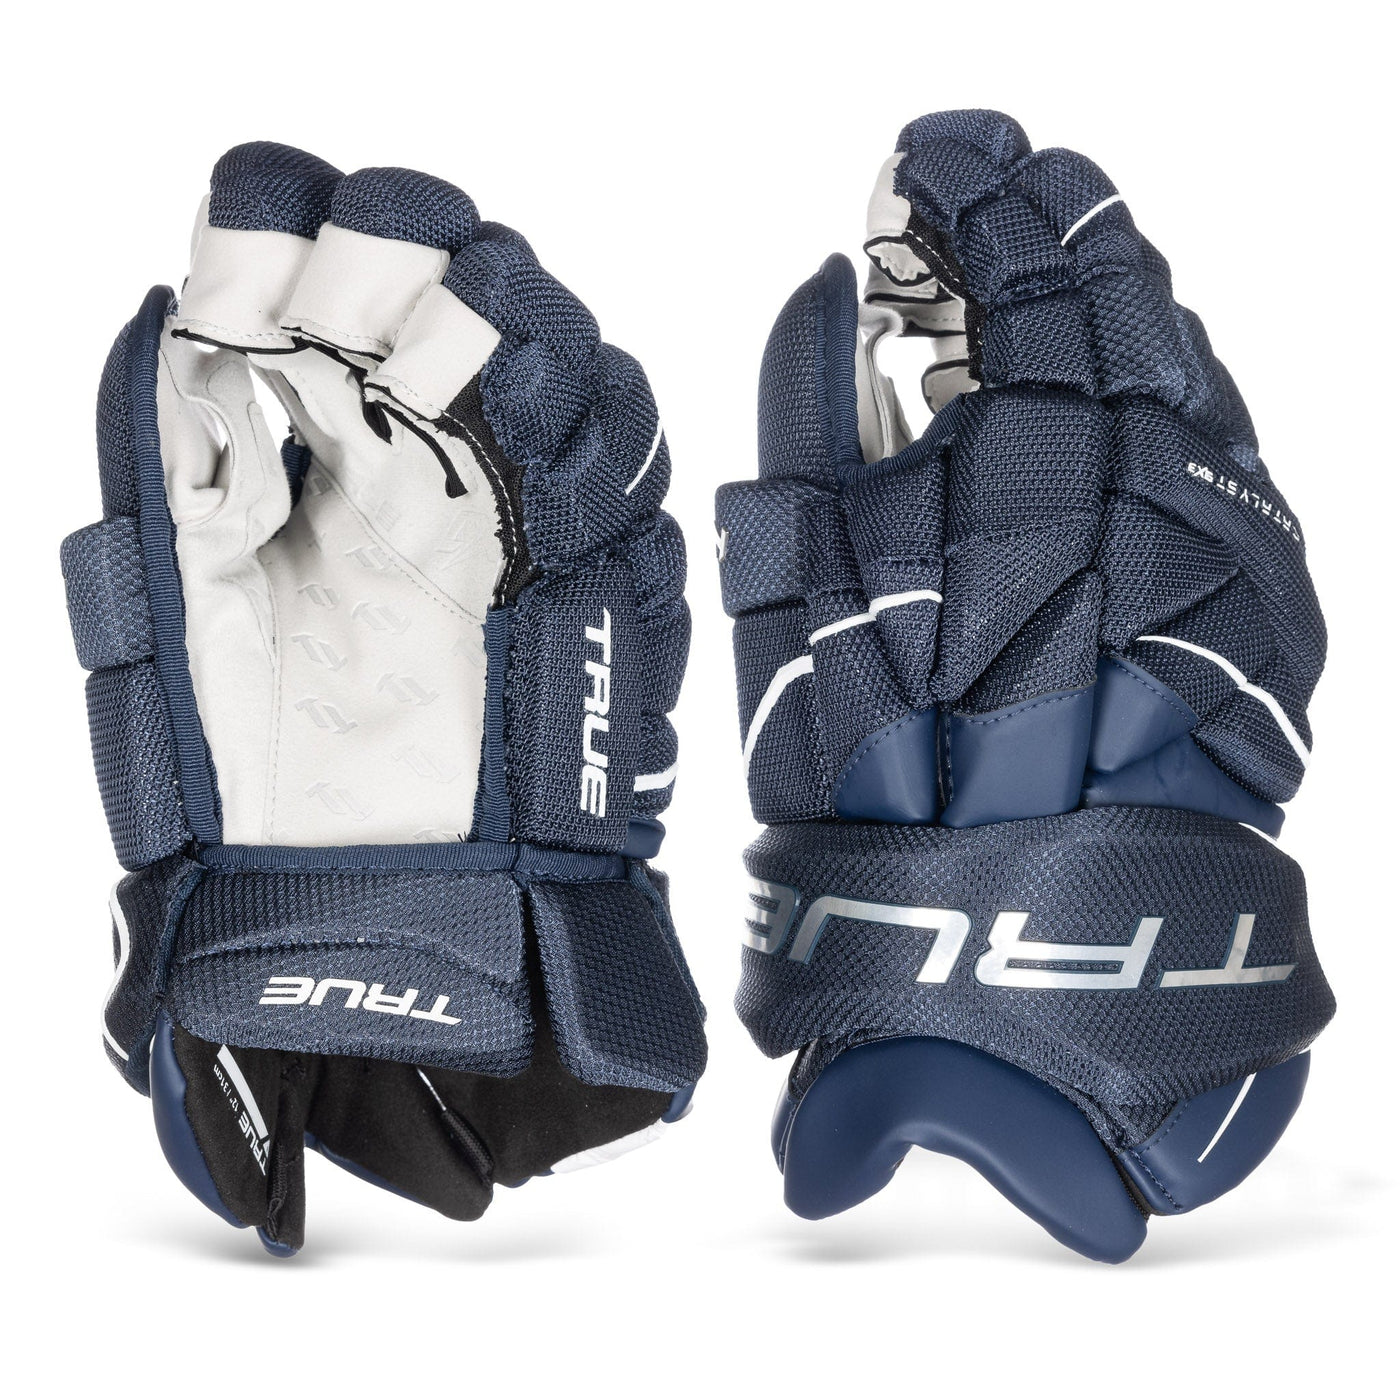 TRUE Catalyst 9X3 Junior Hockey Glove - The Hockey Shop Source For Sports